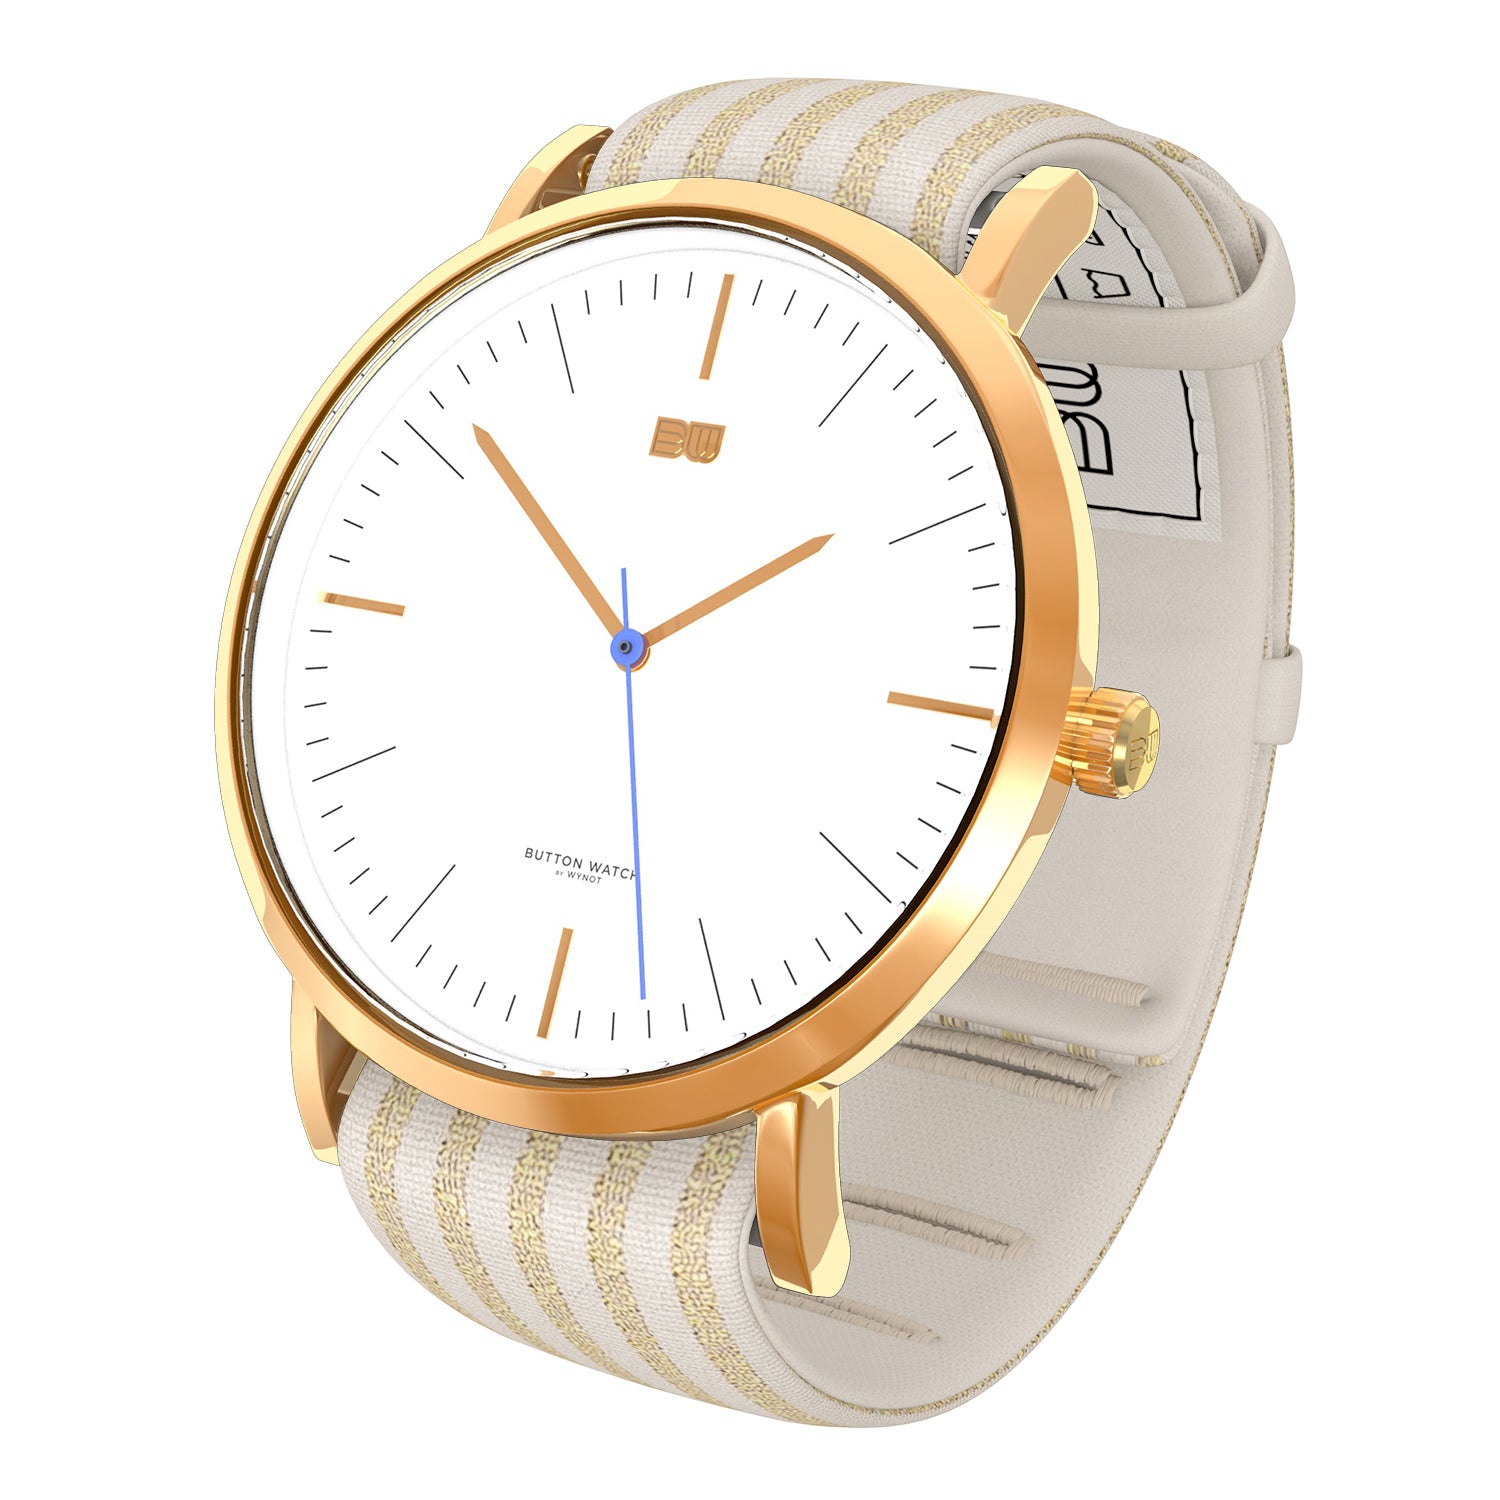 Increíble industria Construir sobre Magari & Gold x Alice Campello · Relojes y correas de moda · Button Watch